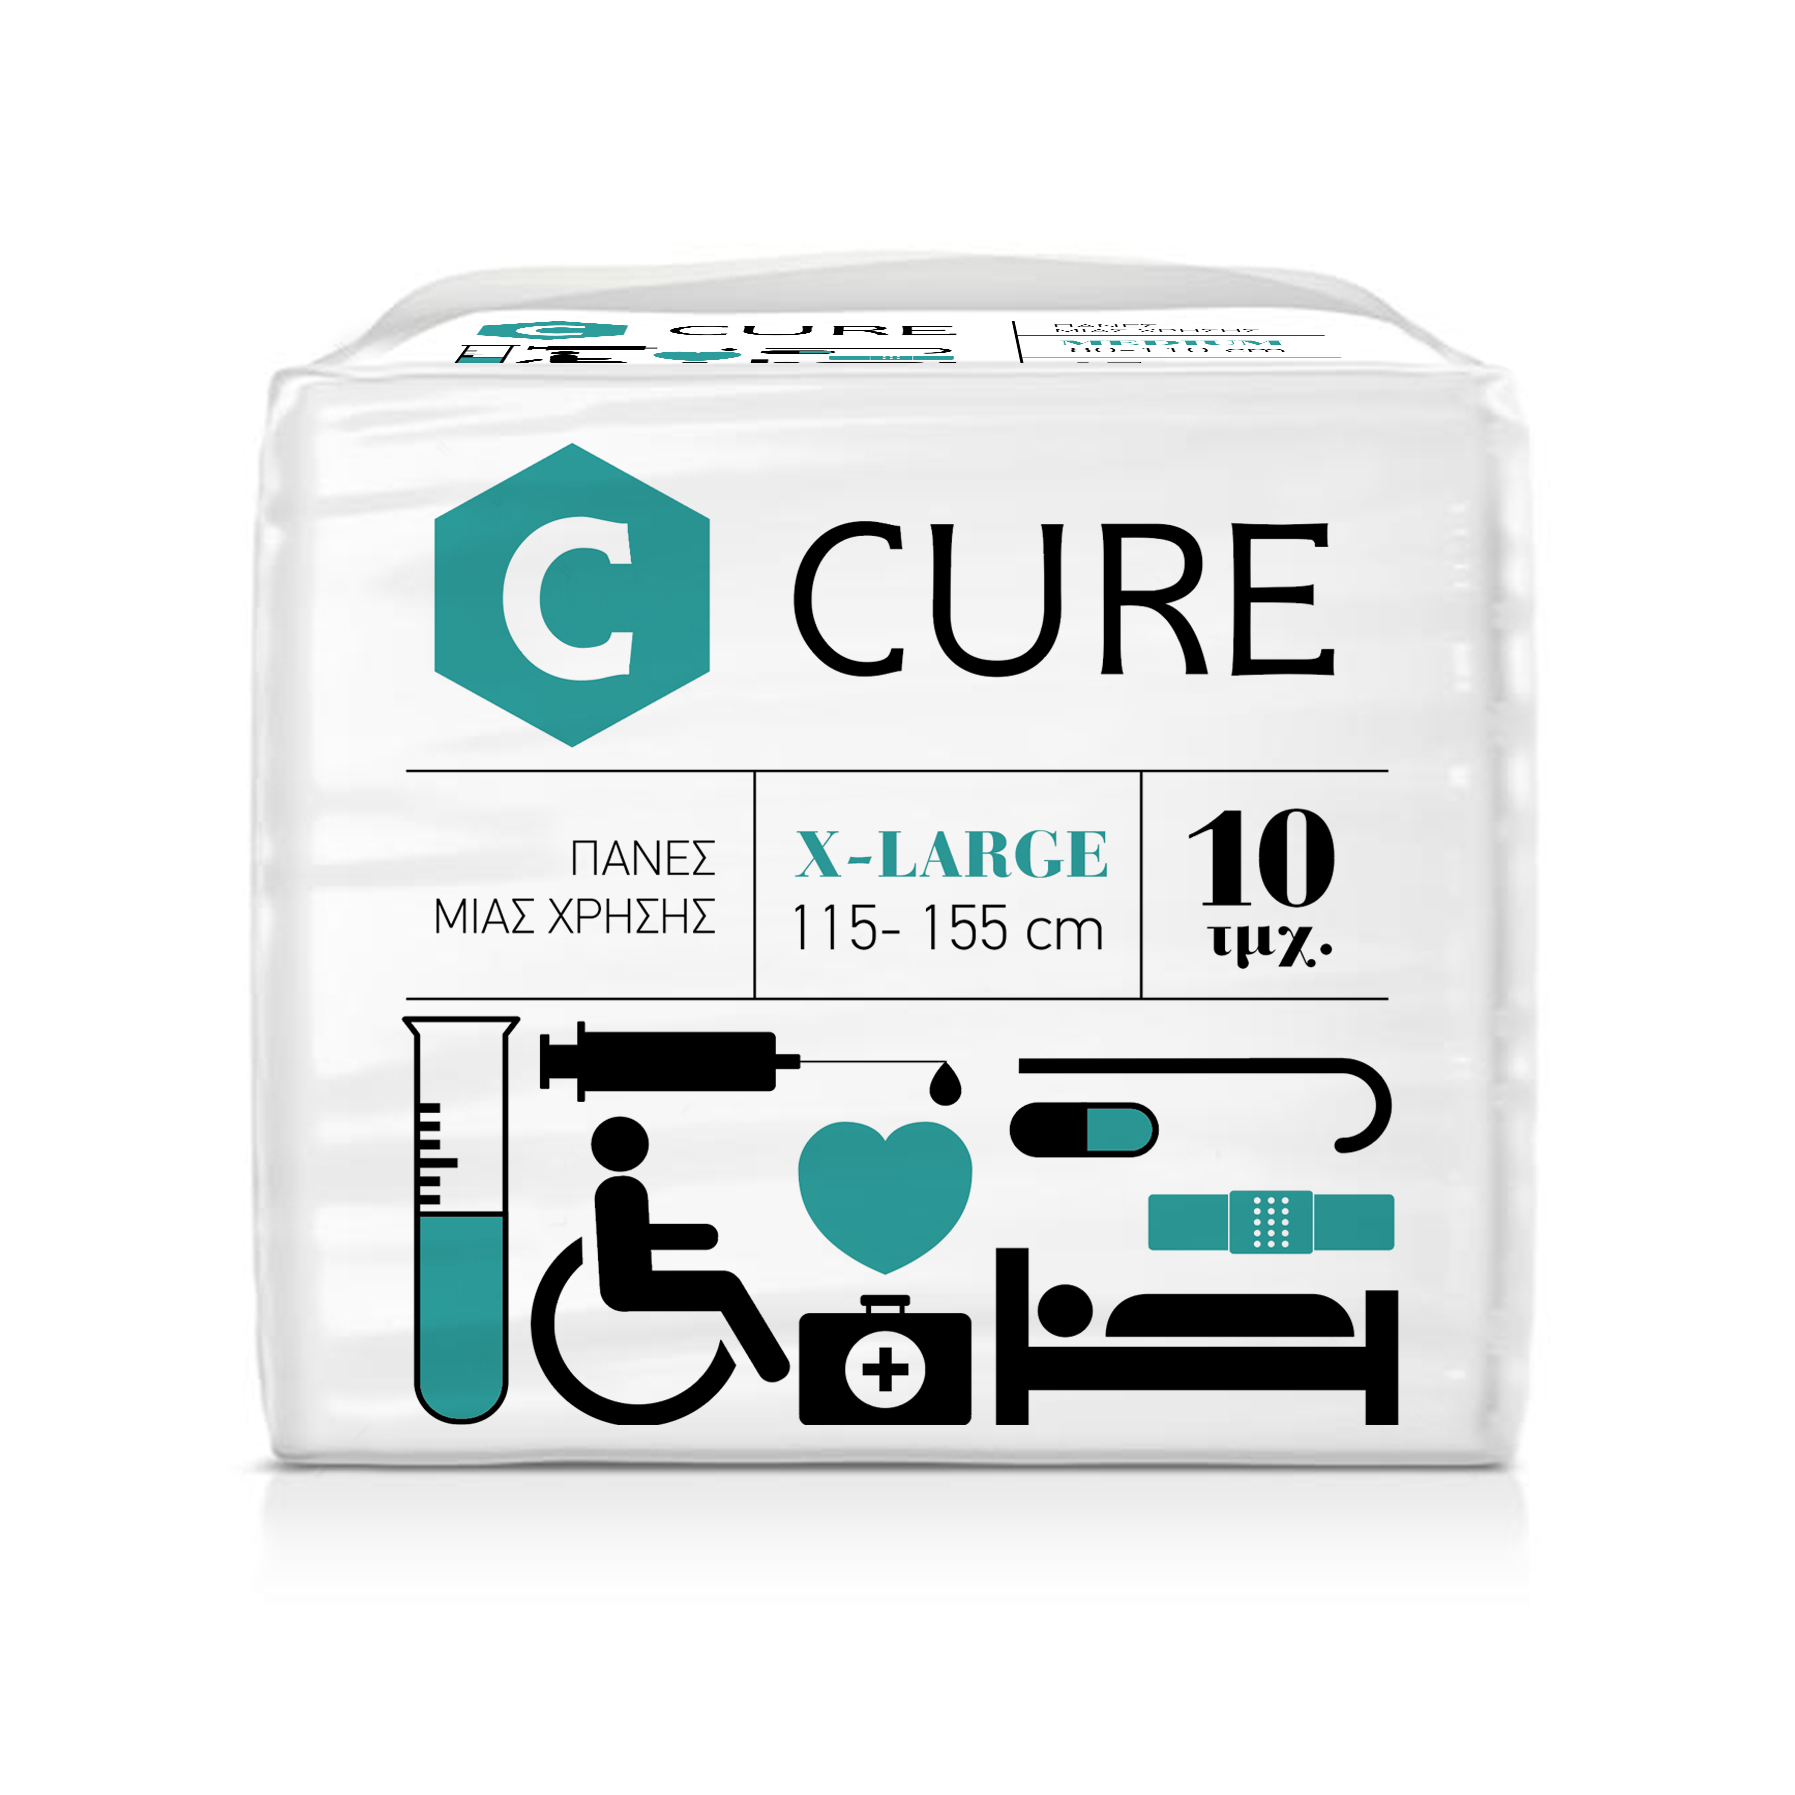 Cure Acne Diapers XLarge 10pcs